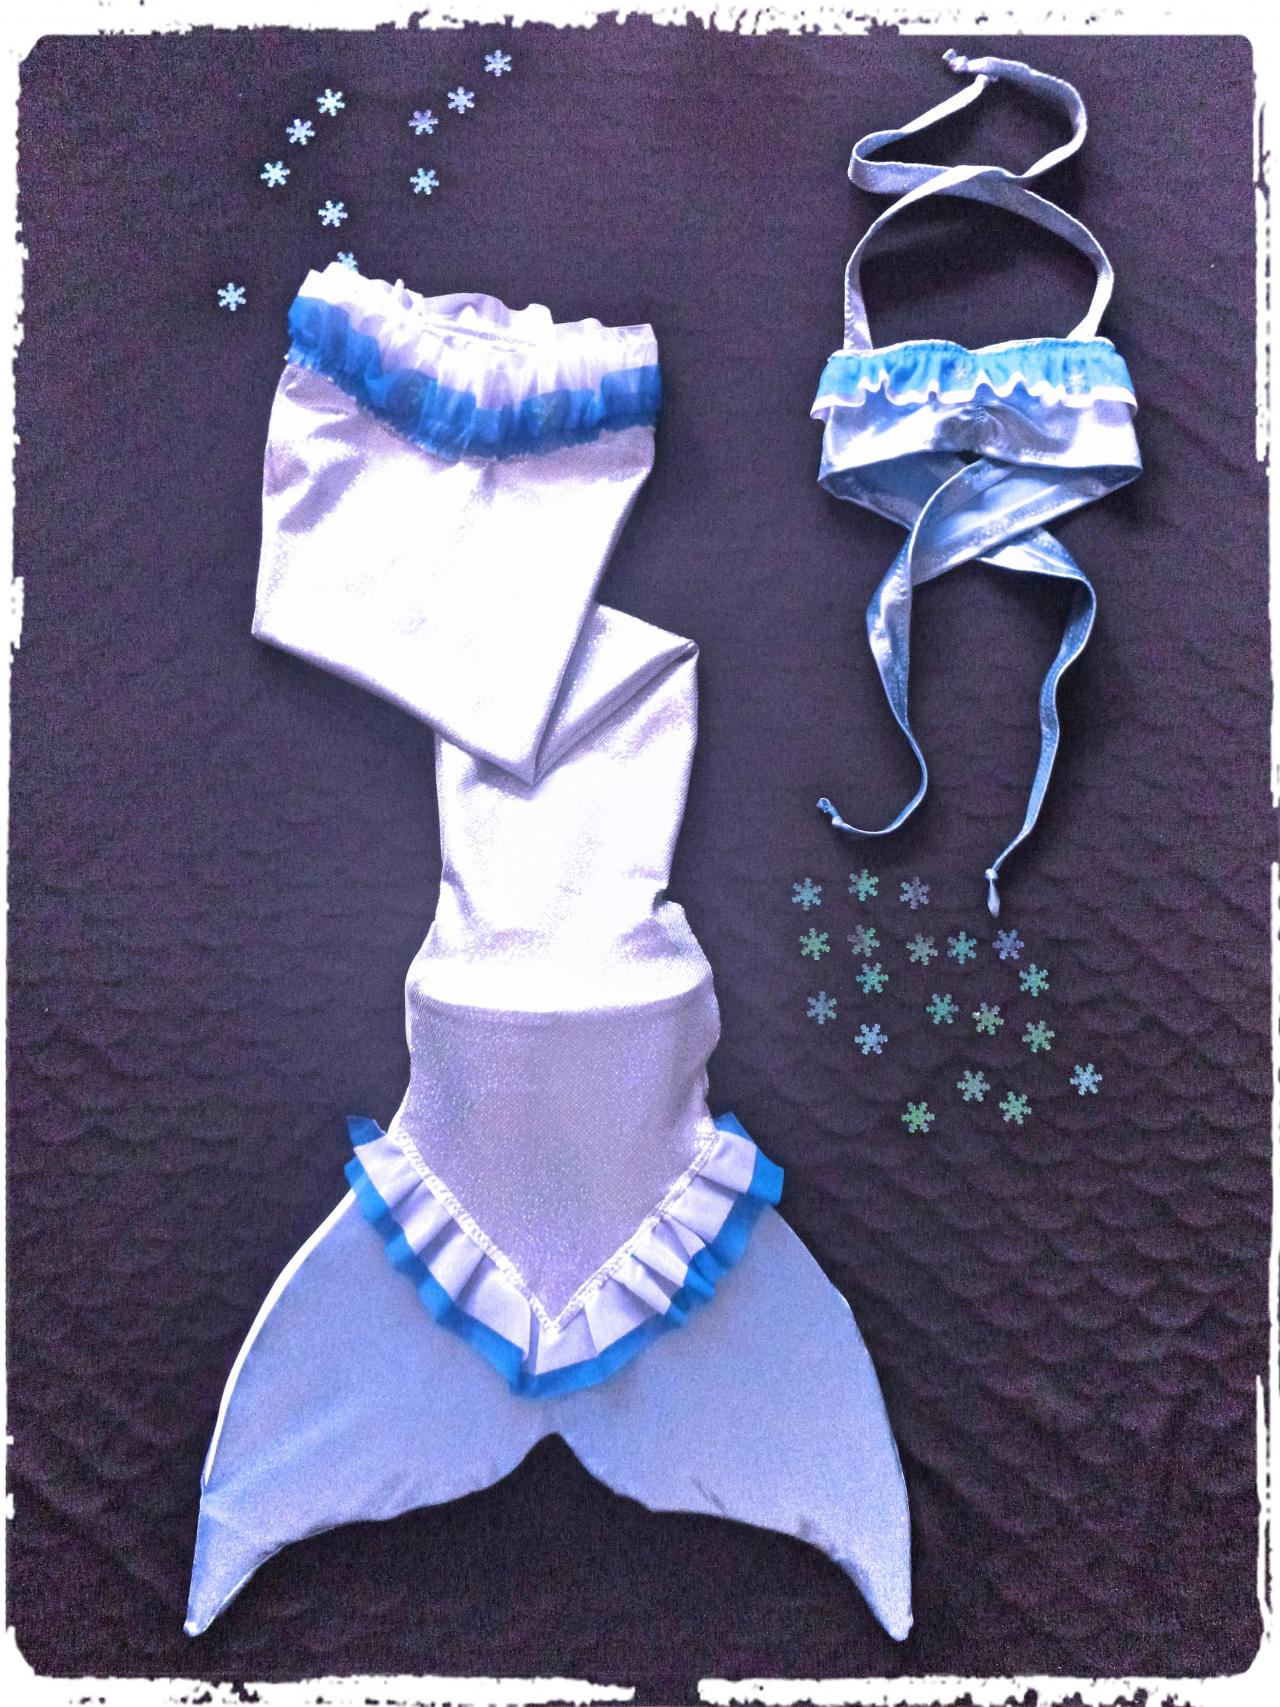 Elsa Frozen Mermaid Tail Swimmable. Finis Mermaid Monofin Included. Handmade By Mermaidreams